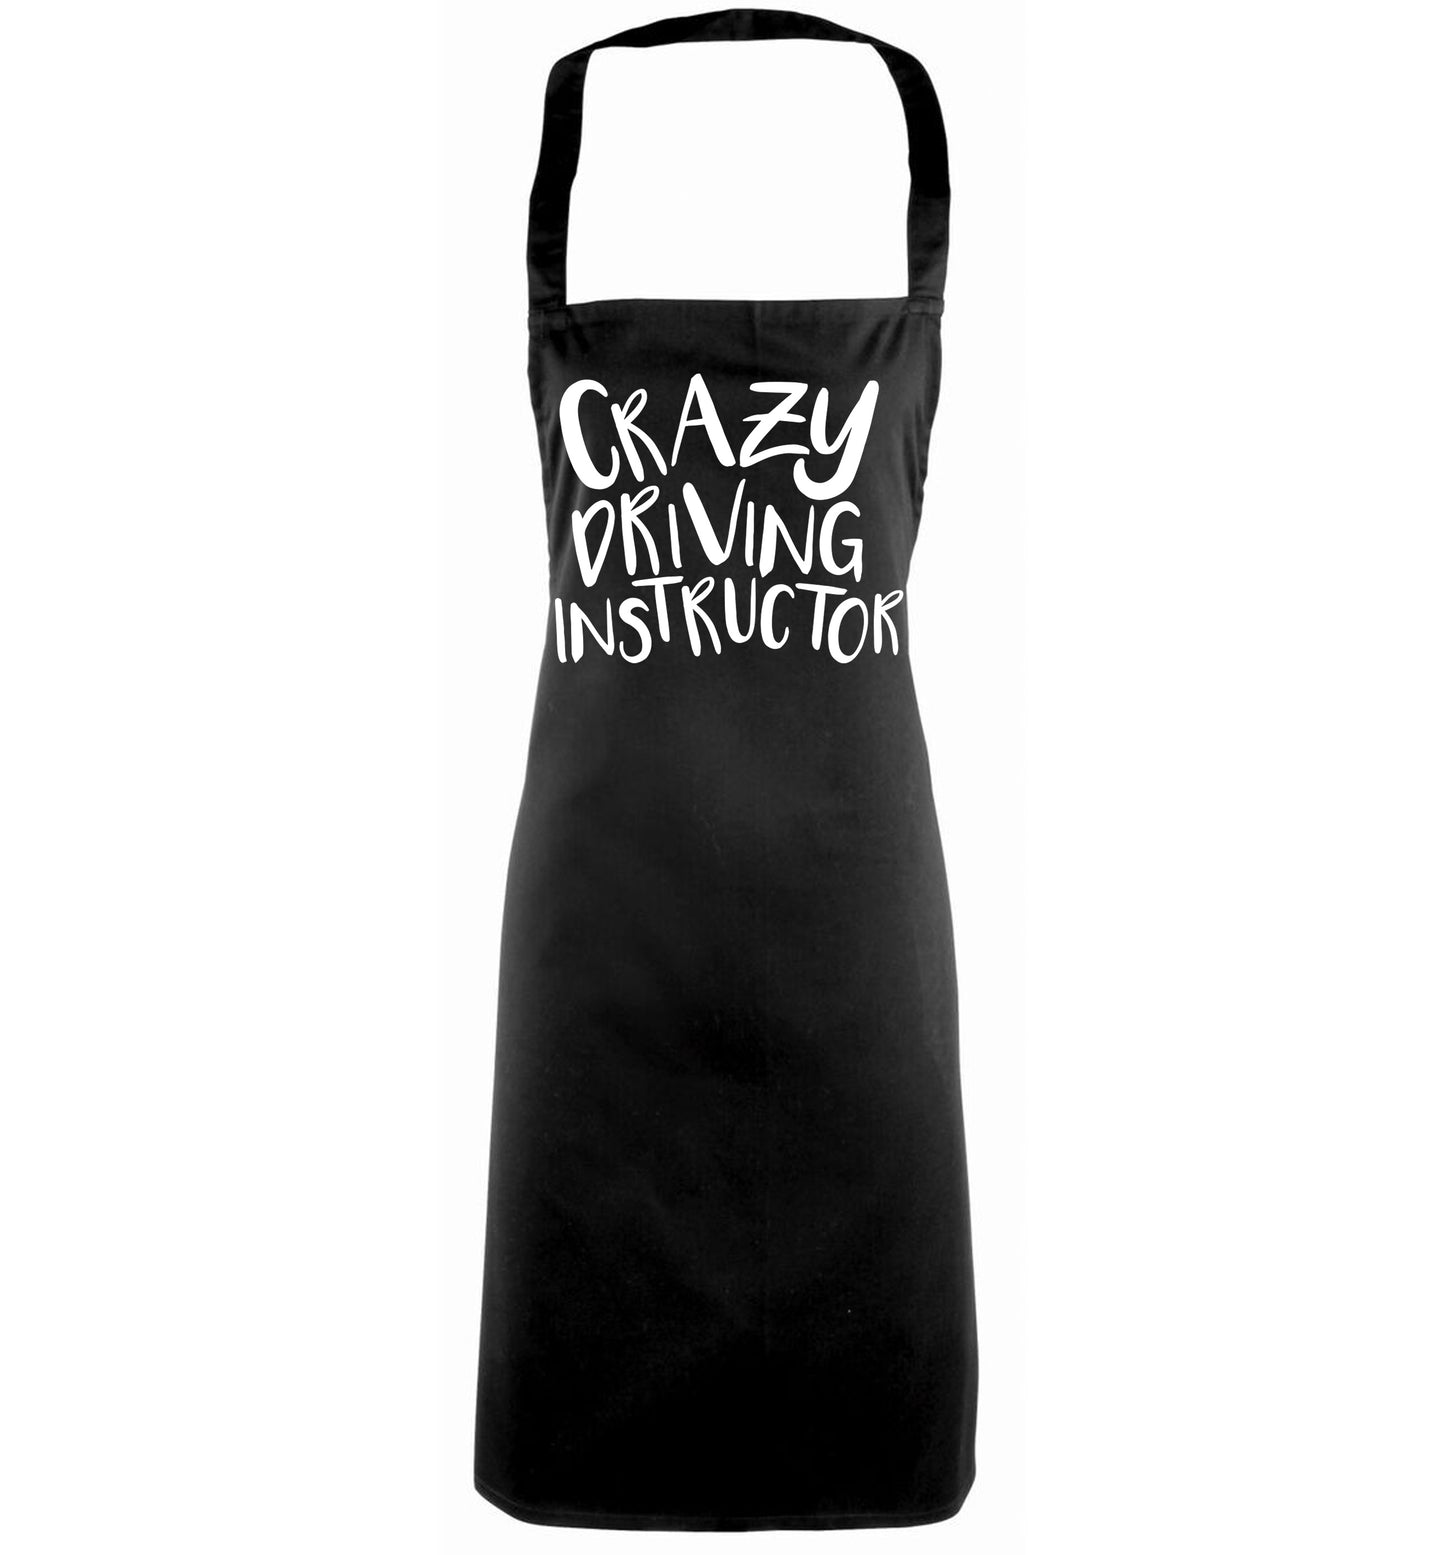 Crazy driving instructor black apron